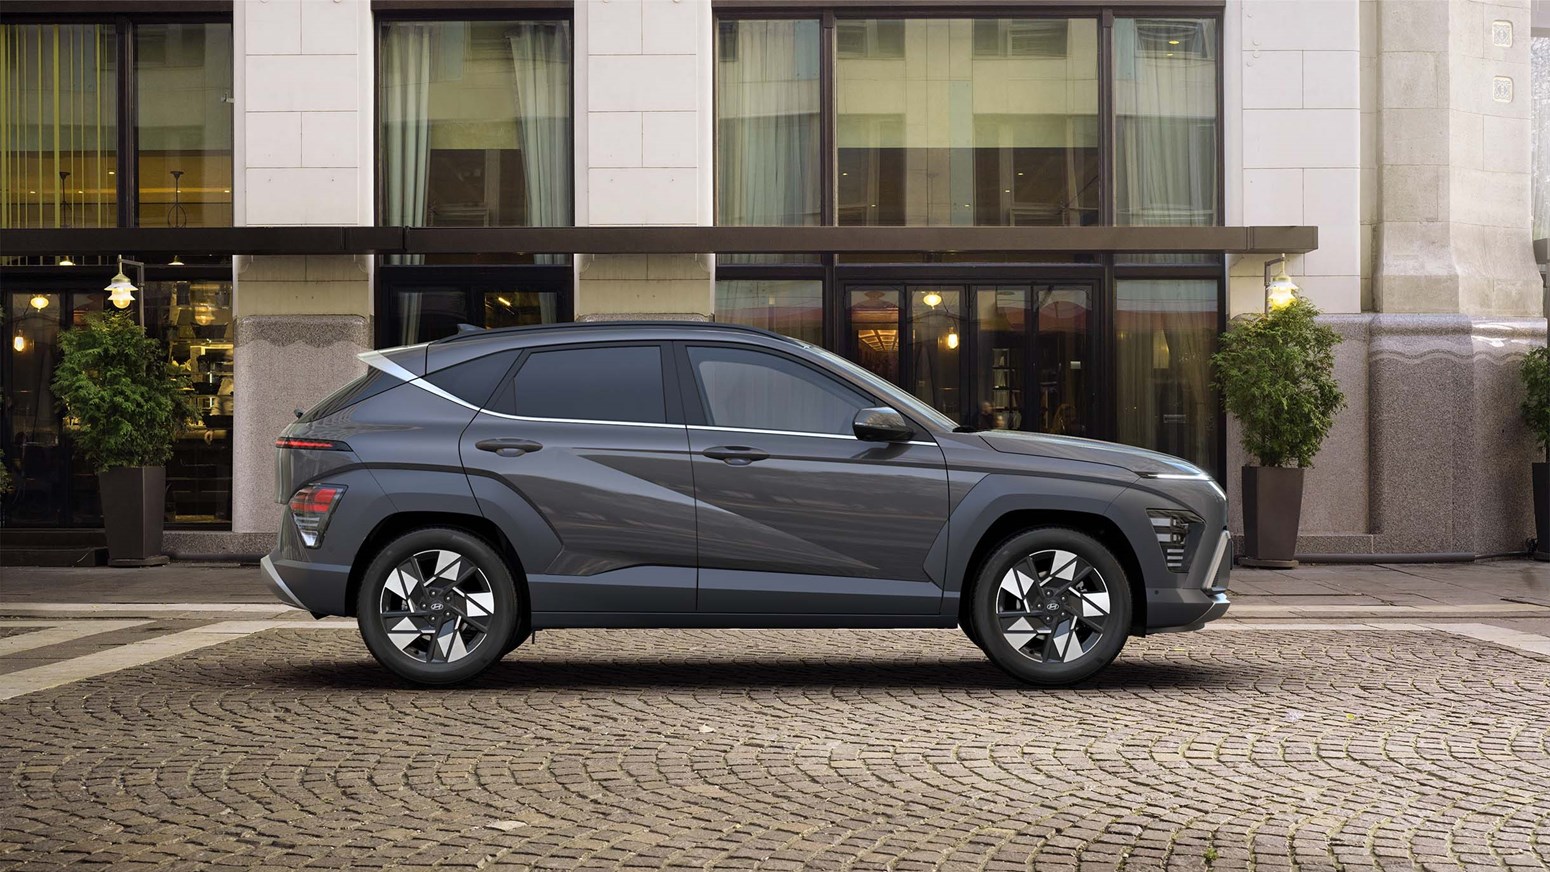 Hyundai KONA Hybrid i exteriörfärg Ecotronic Gray.